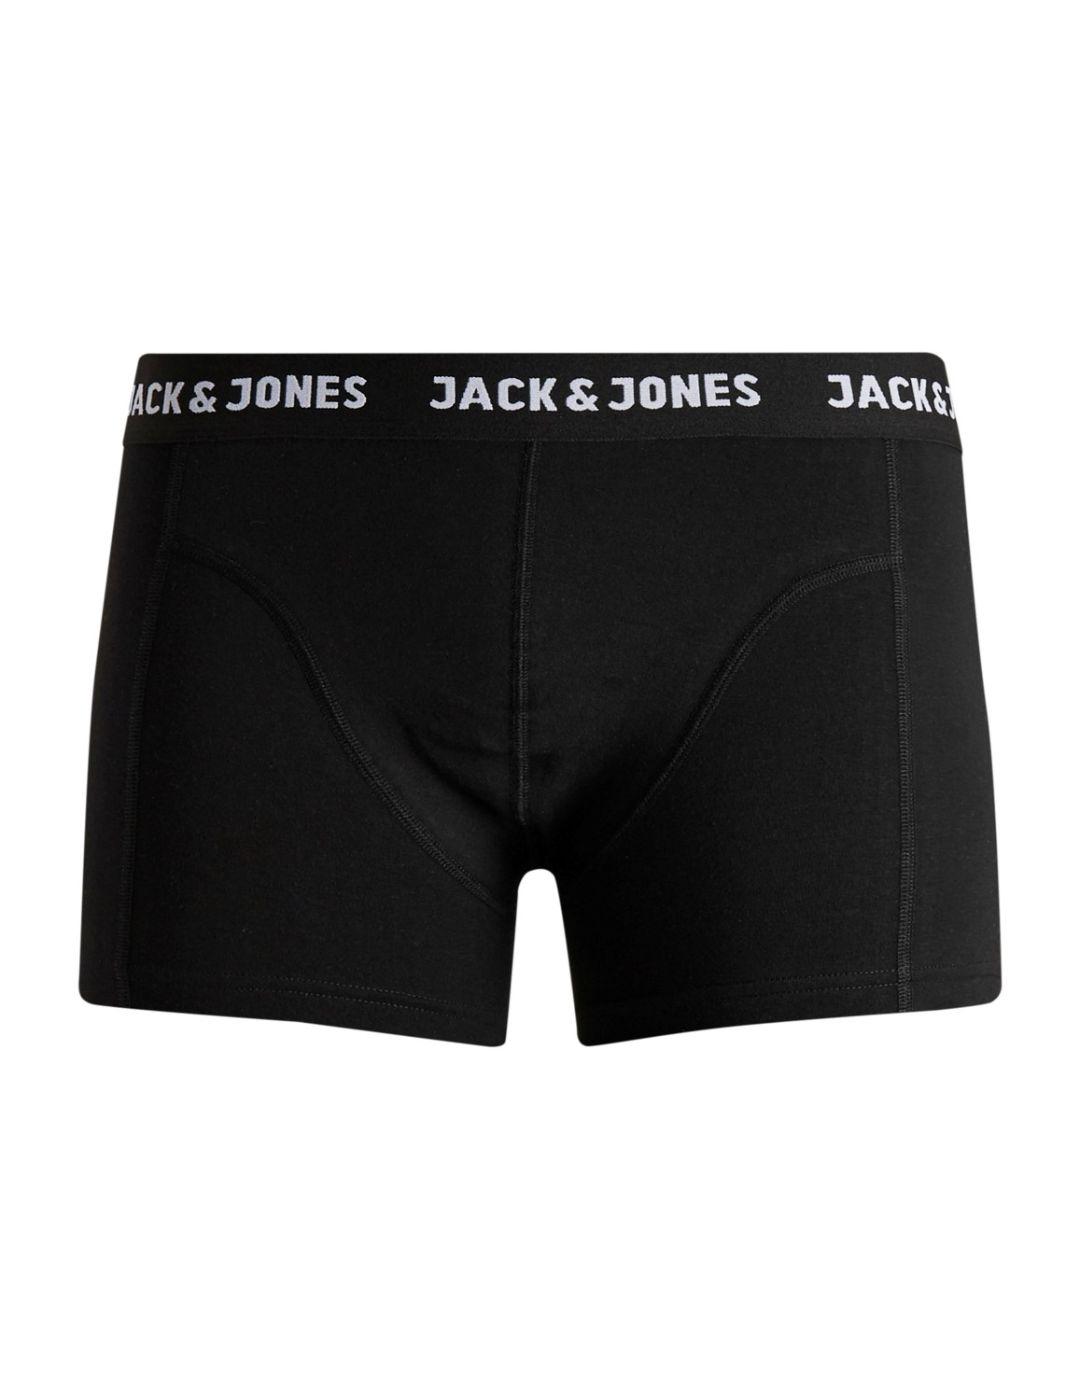 Calzoncillos Jack-Jones Anthony trunks hombre -a